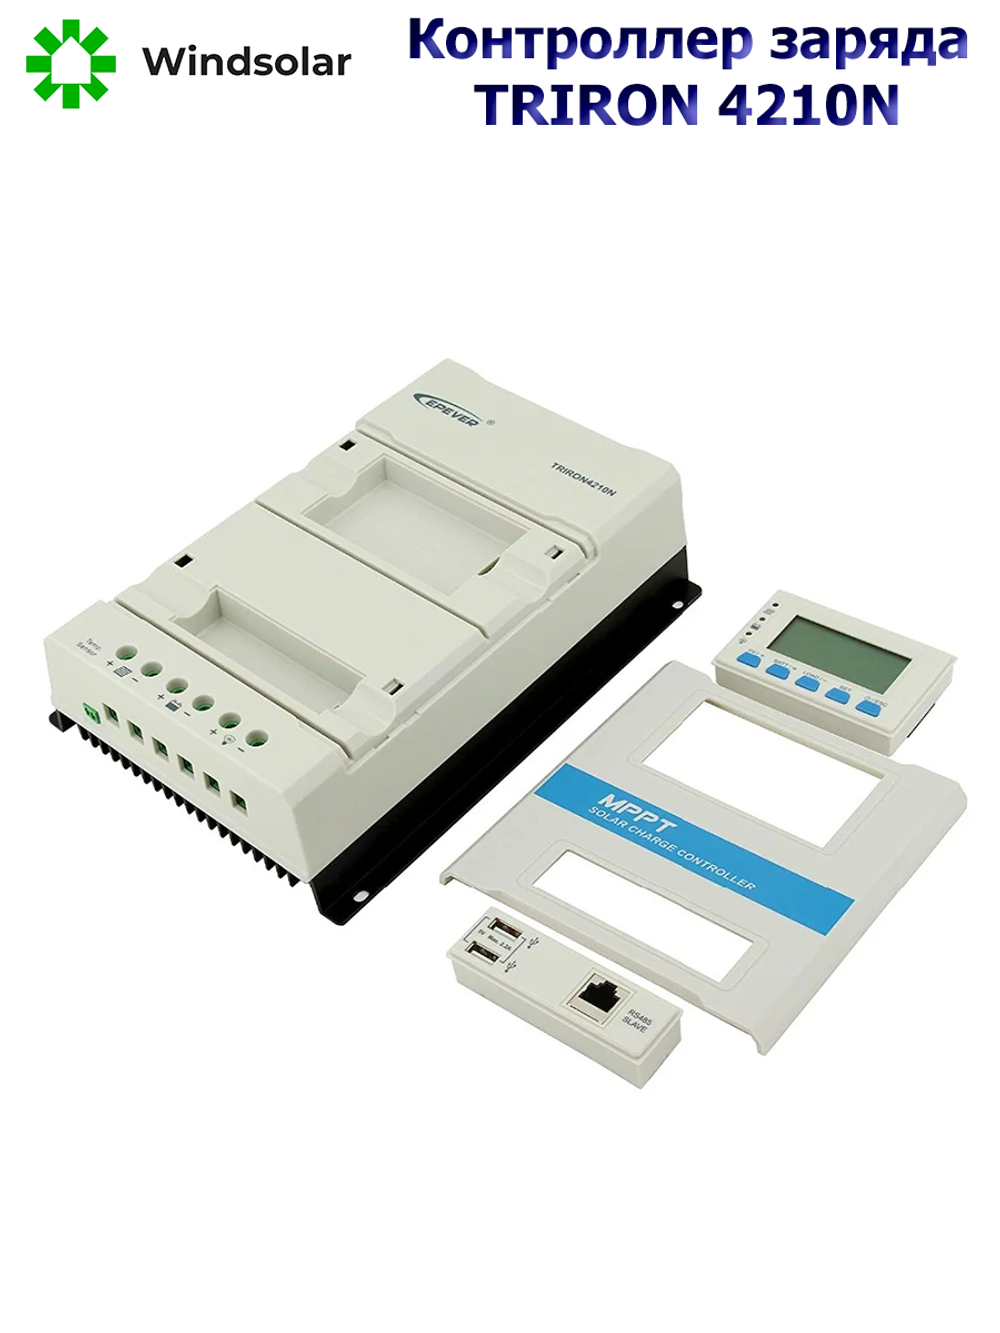 Контроллер заряда Epever TRIRON 4210N DS2/UCS (RCM) [MPPT / 40A / 12/24V / 520/1040W]